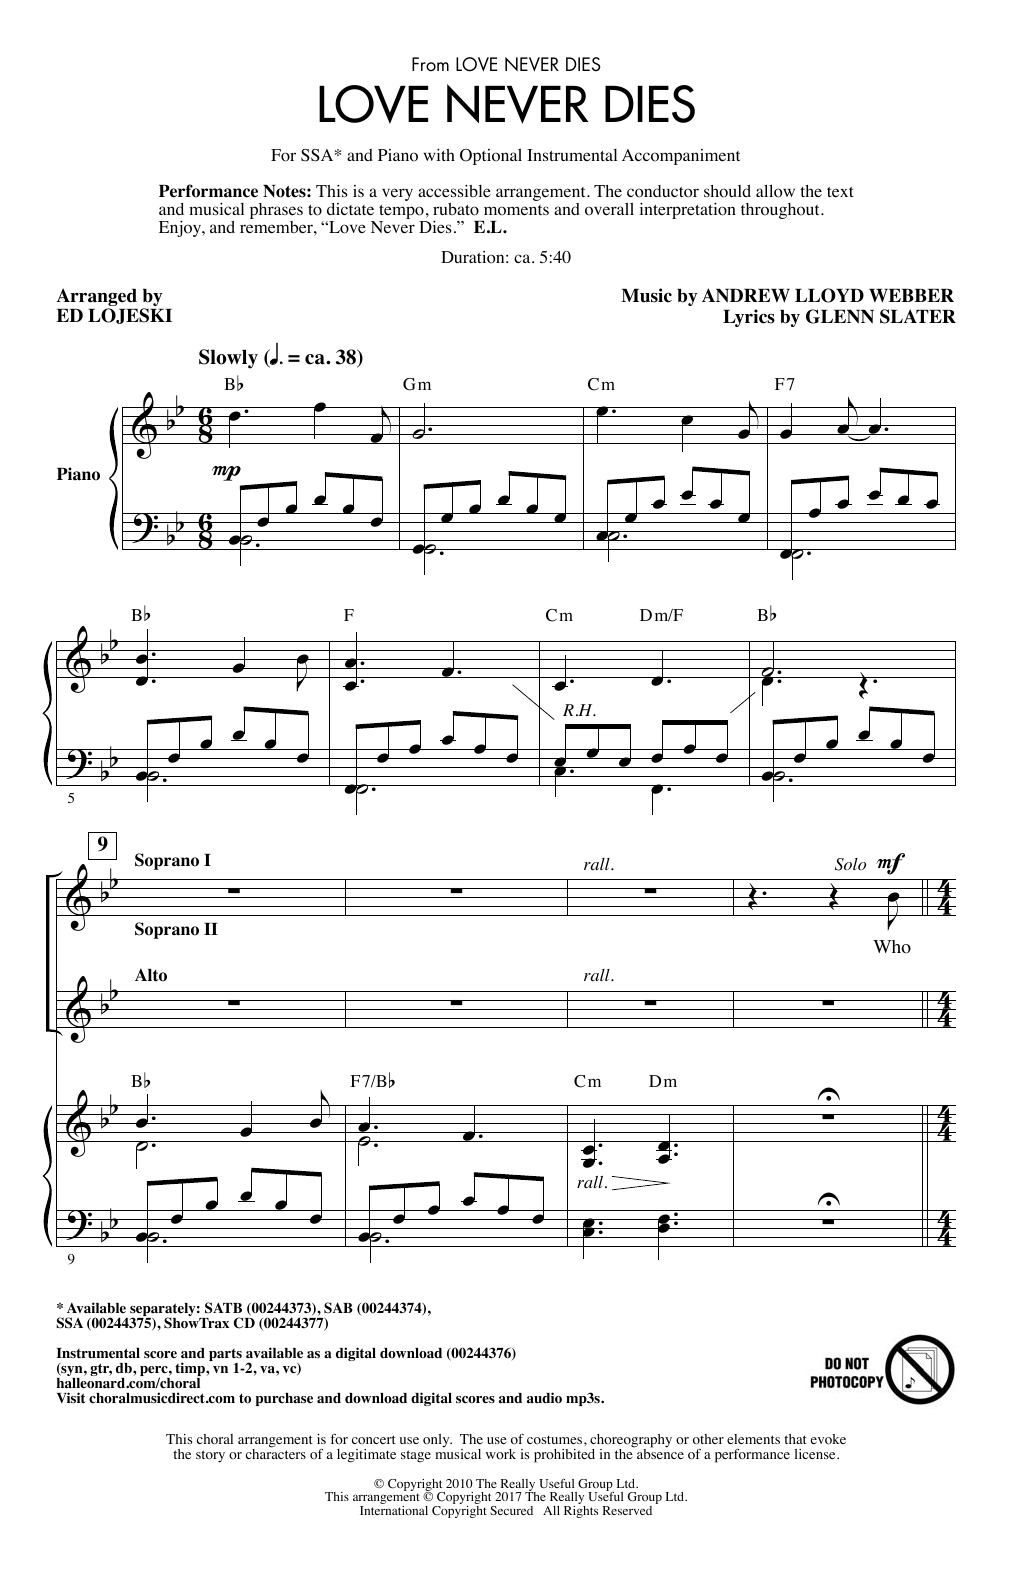 Andrew Lloyd Webber Love Never Dies (arr. Ed Lojeski) Sheet Music Notes & Chords for SAB - Download or Print PDF